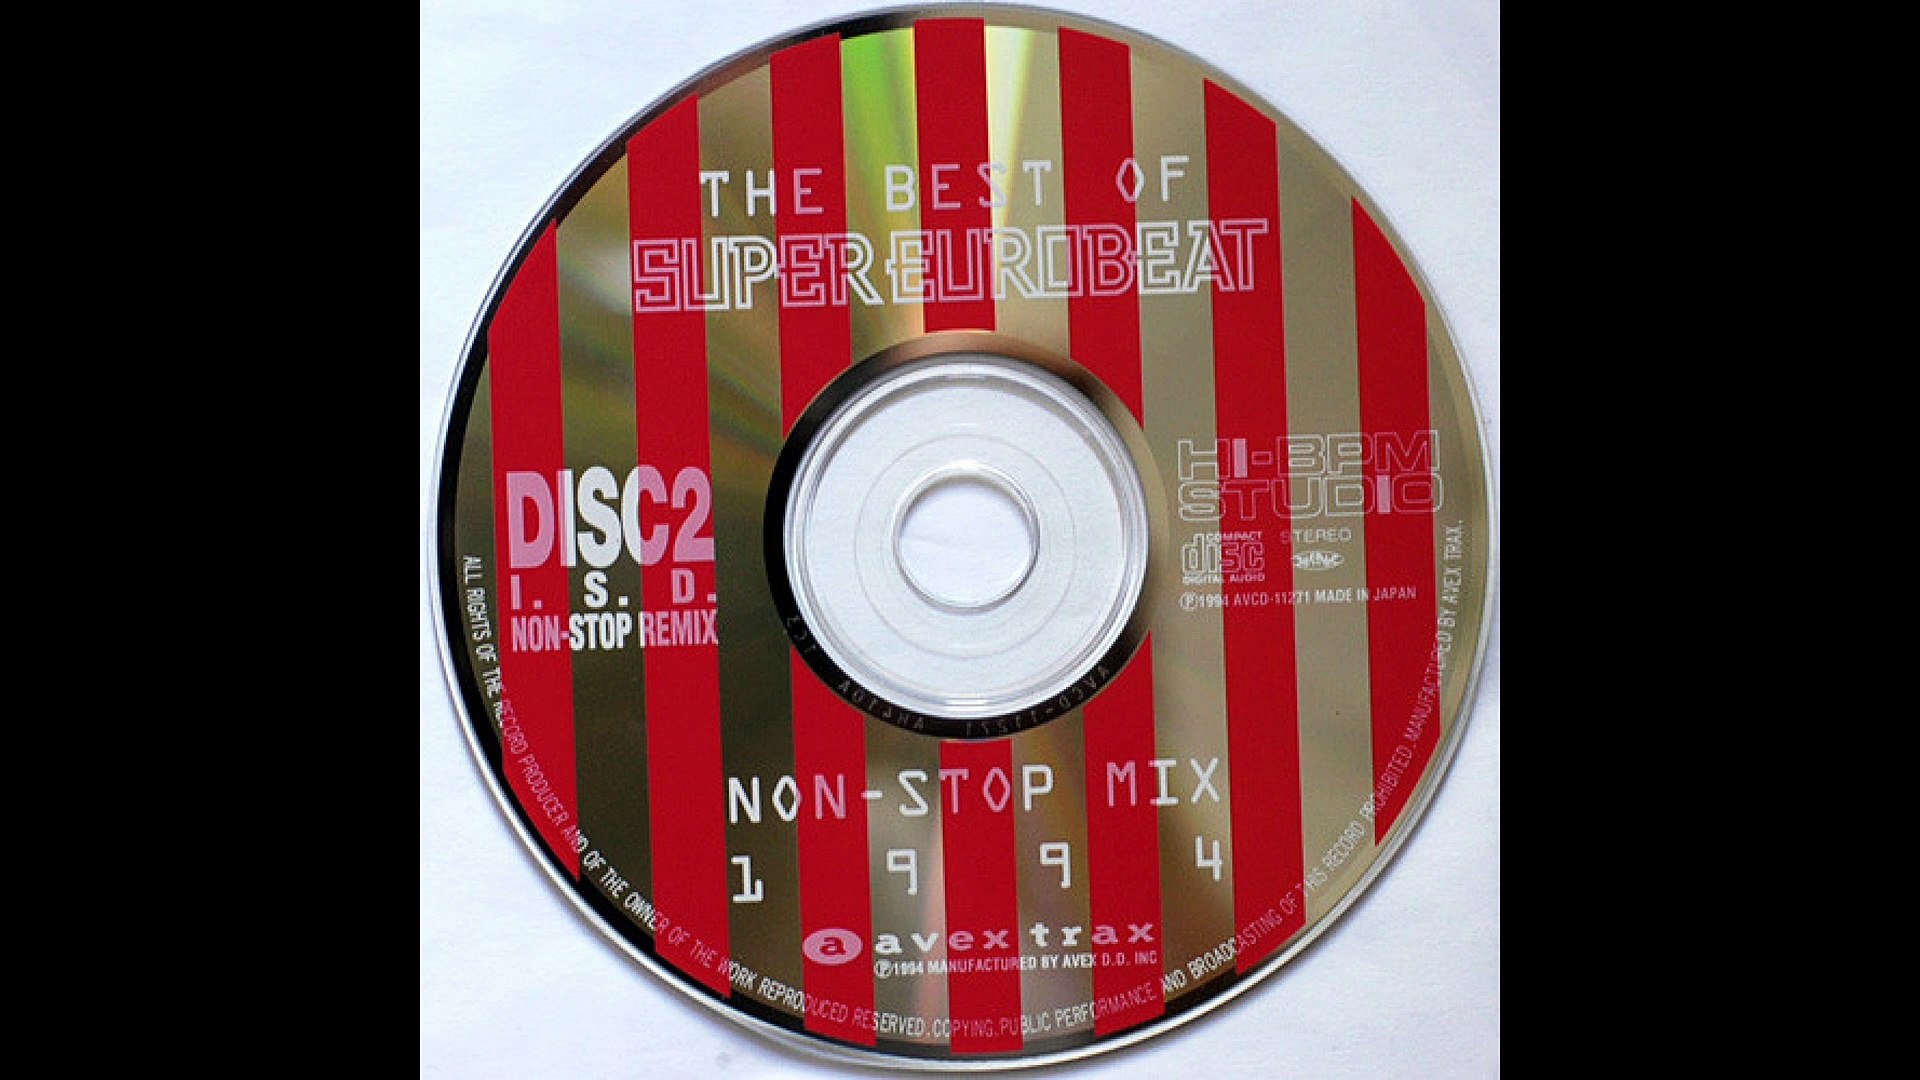 The Best Of Non-Stop Super Eurobeat 1994 - Disc 2 【I.S.D. Remix】